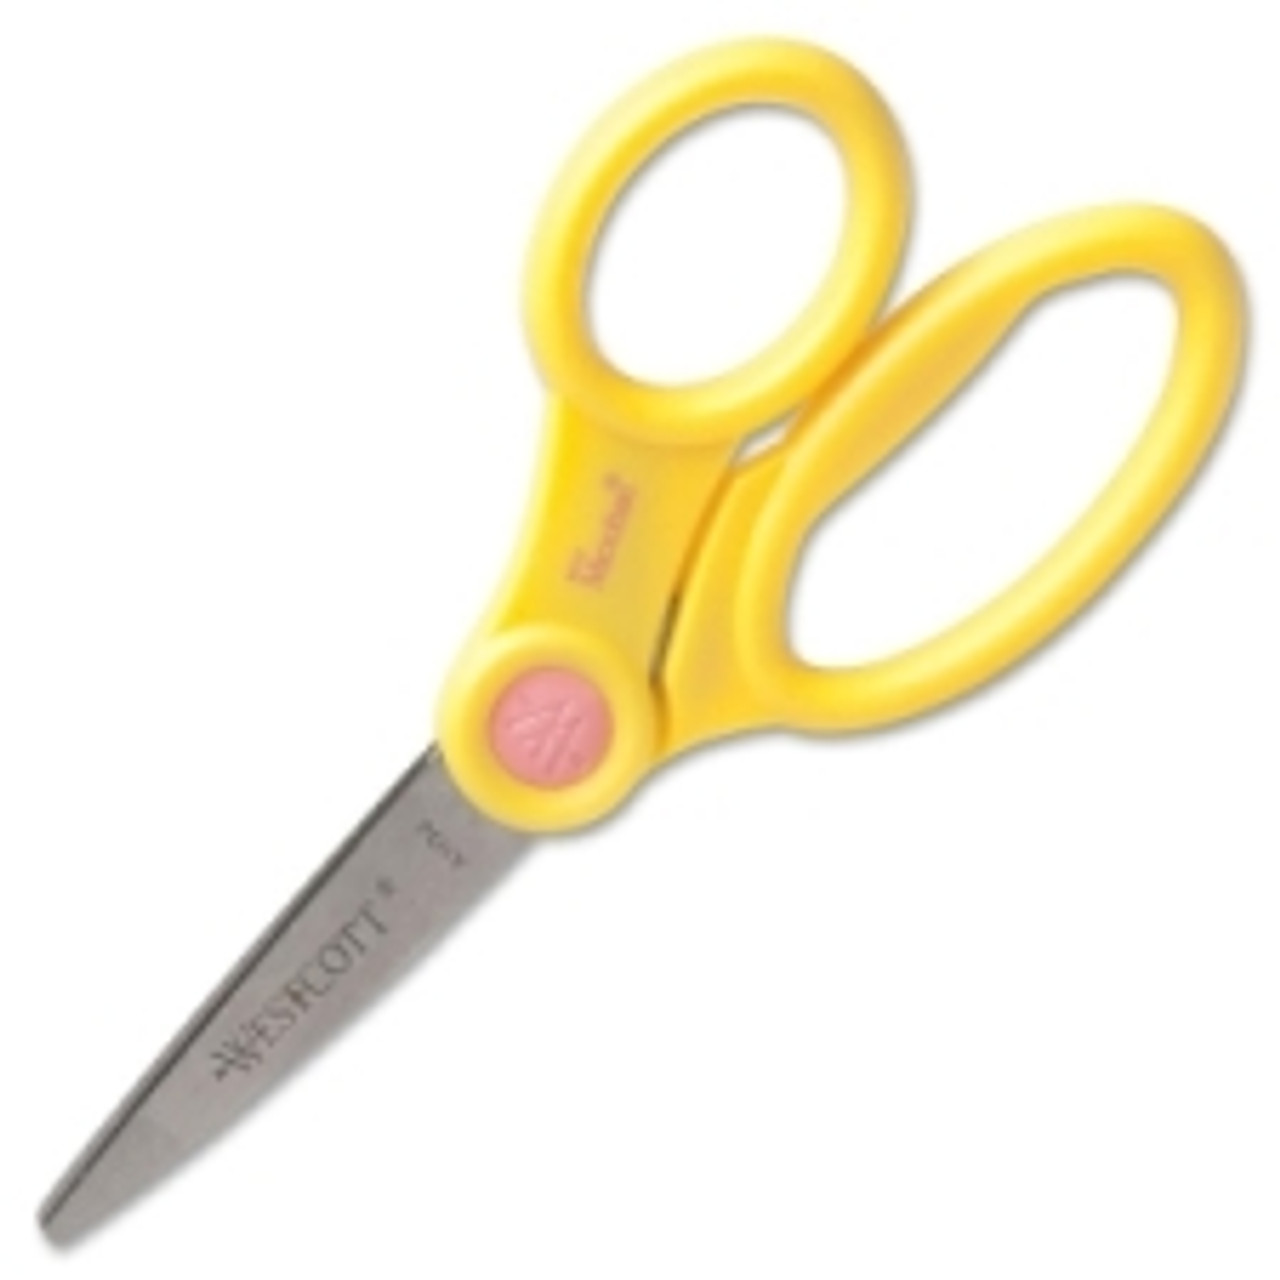 Westcott Kids Scissors - 5 Overall Length - Pointed 